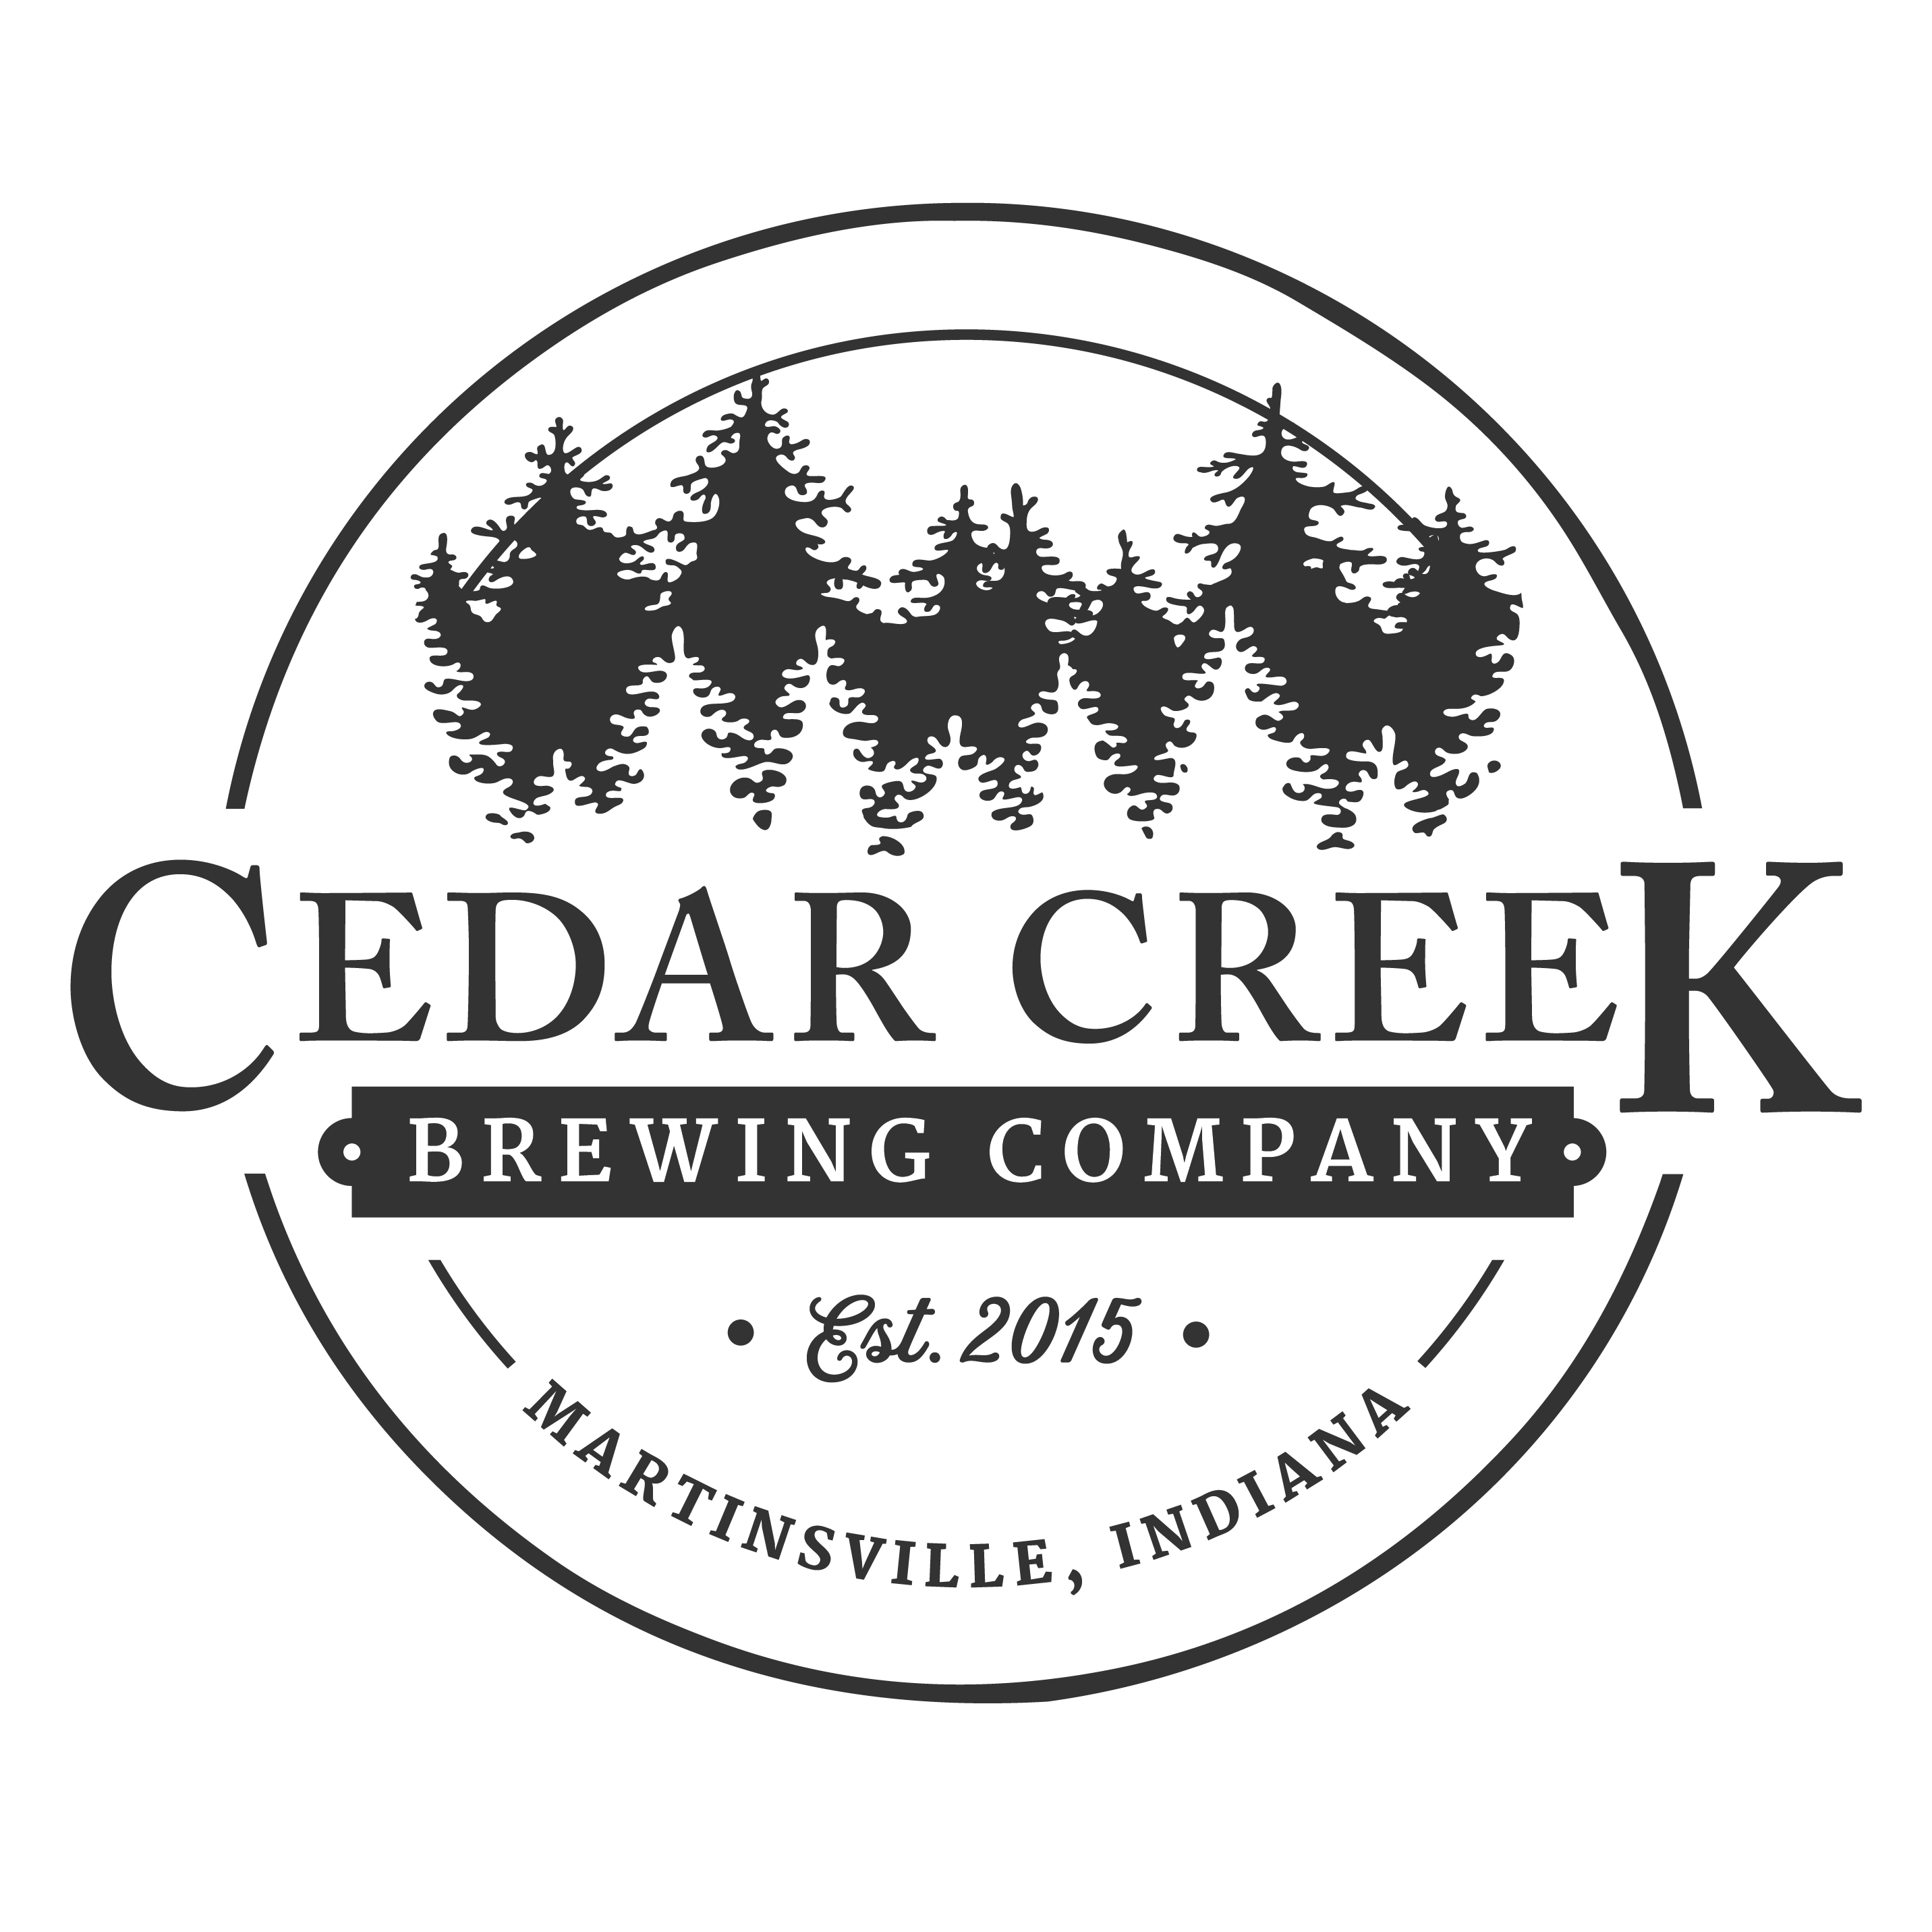 Creek Logo - wholesale – Cedar Creek Brewing Co, Martinsville, IN 46151